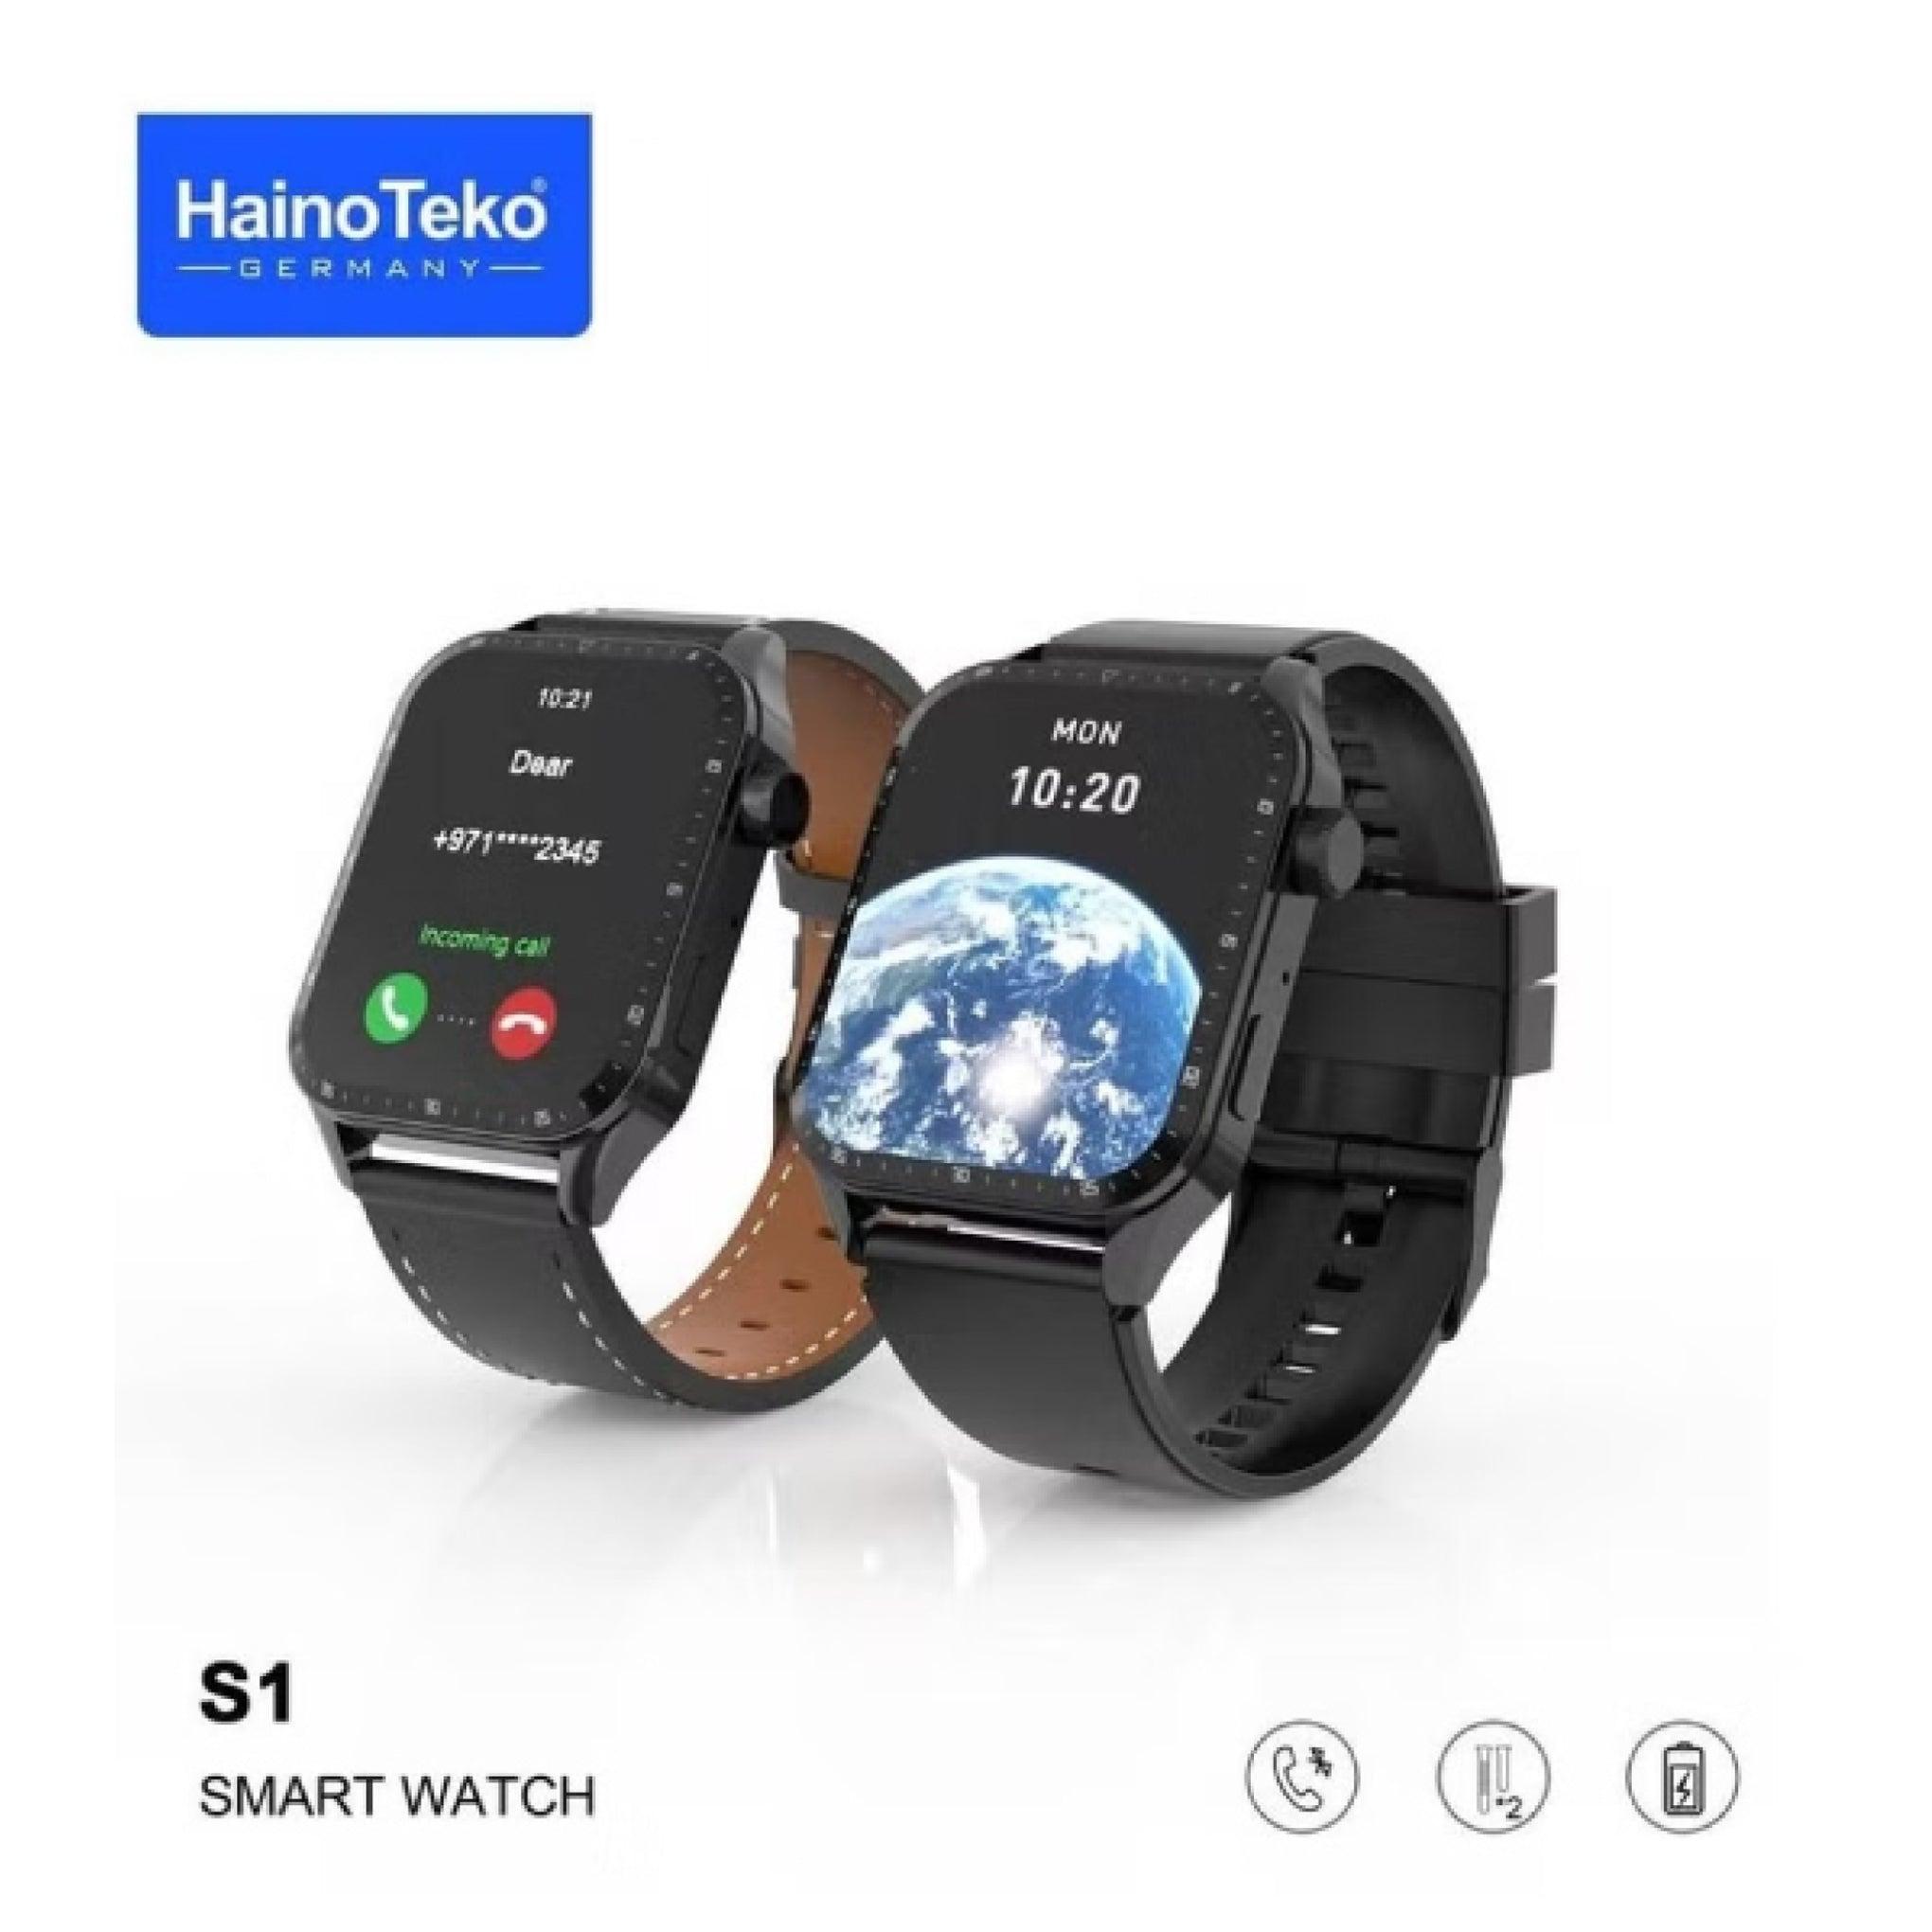 ساعة يد للرجال و الأولاد بحزامين وشاحن مغناطيسي لاسلكي هاينو تيكو Haino Teko Germany S1 Smartwatch With Two Strap And Wireless Magnetic Charger For Men's And Boy's